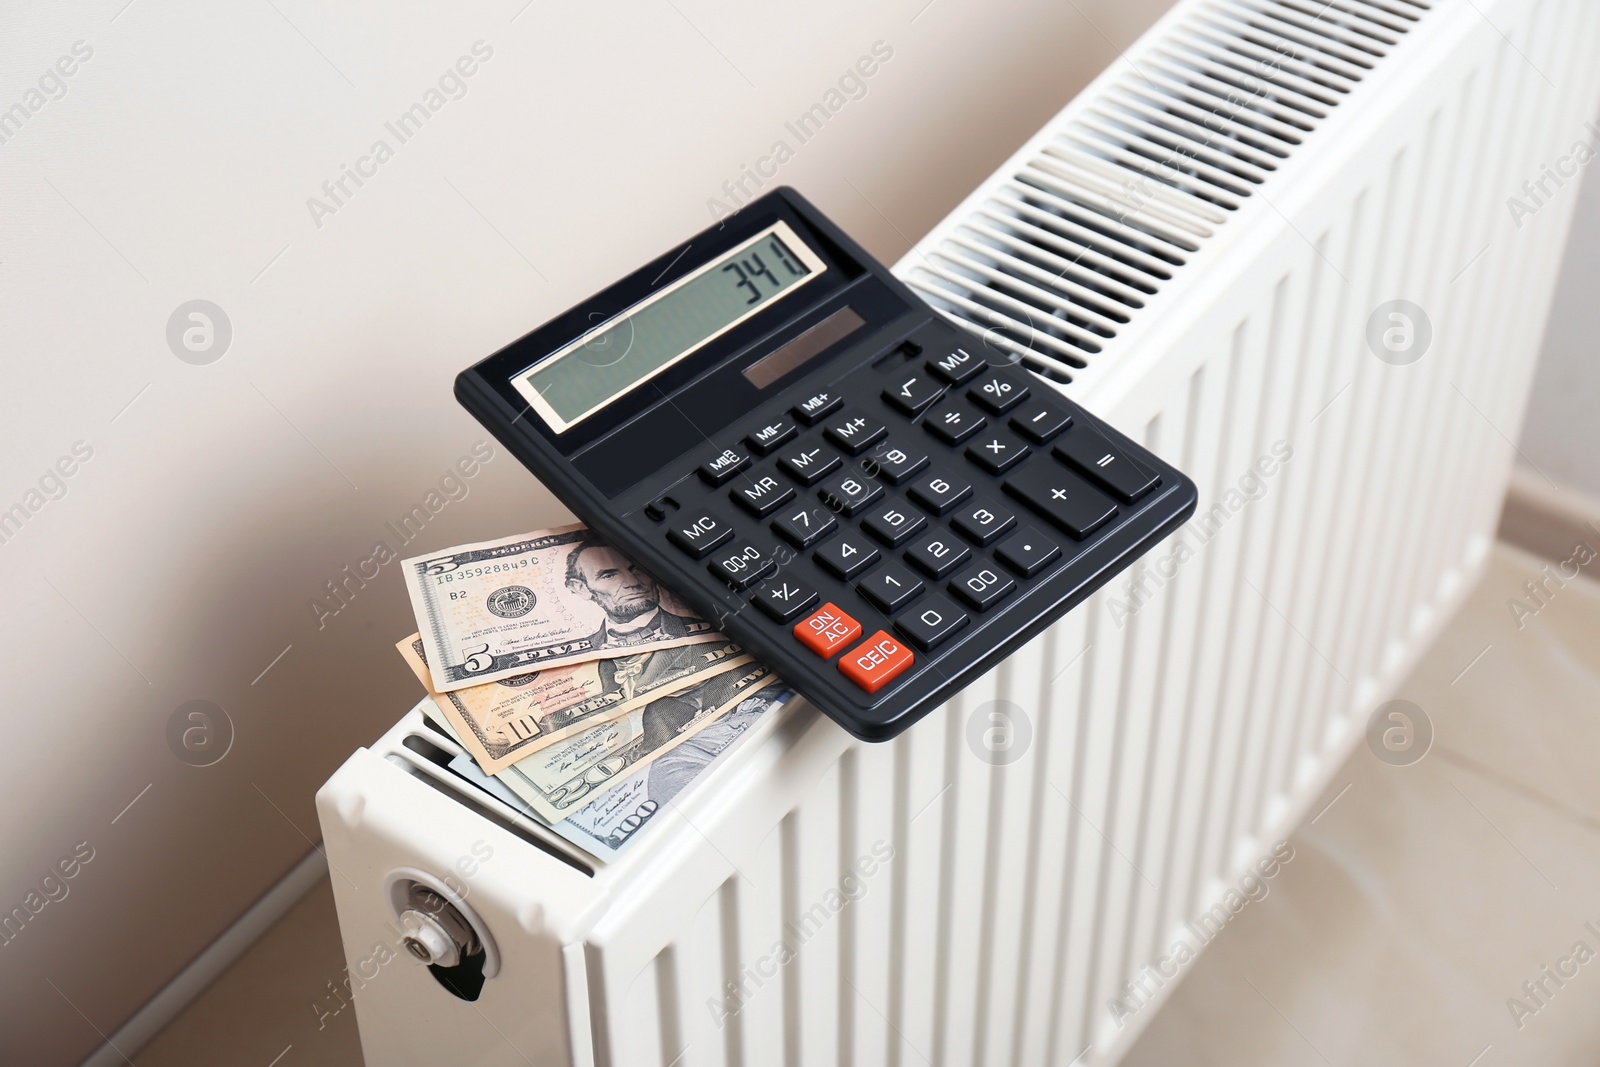 Photo of Calculator and money on heating radiator indoors